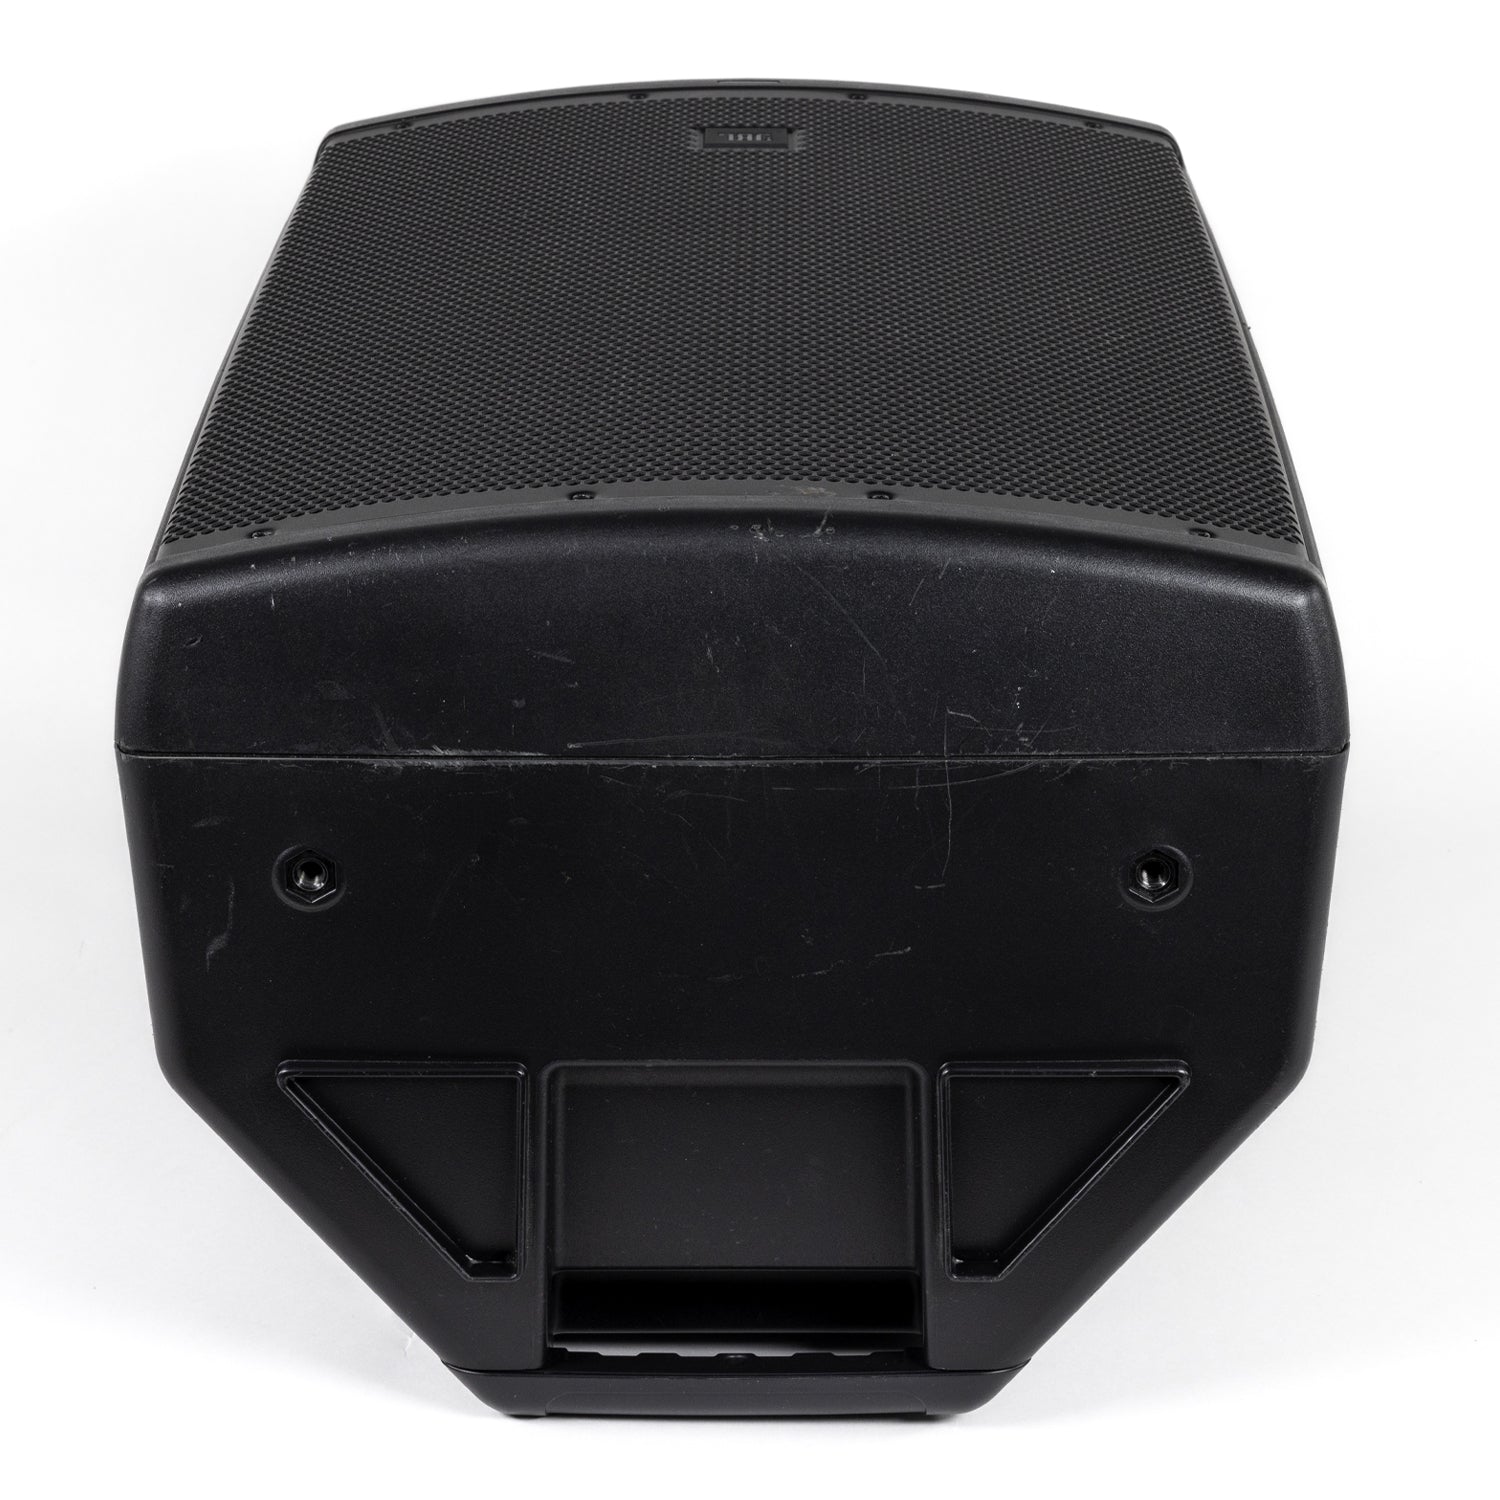 JBL Professional EON615 15" 2-Way Powered Speaker